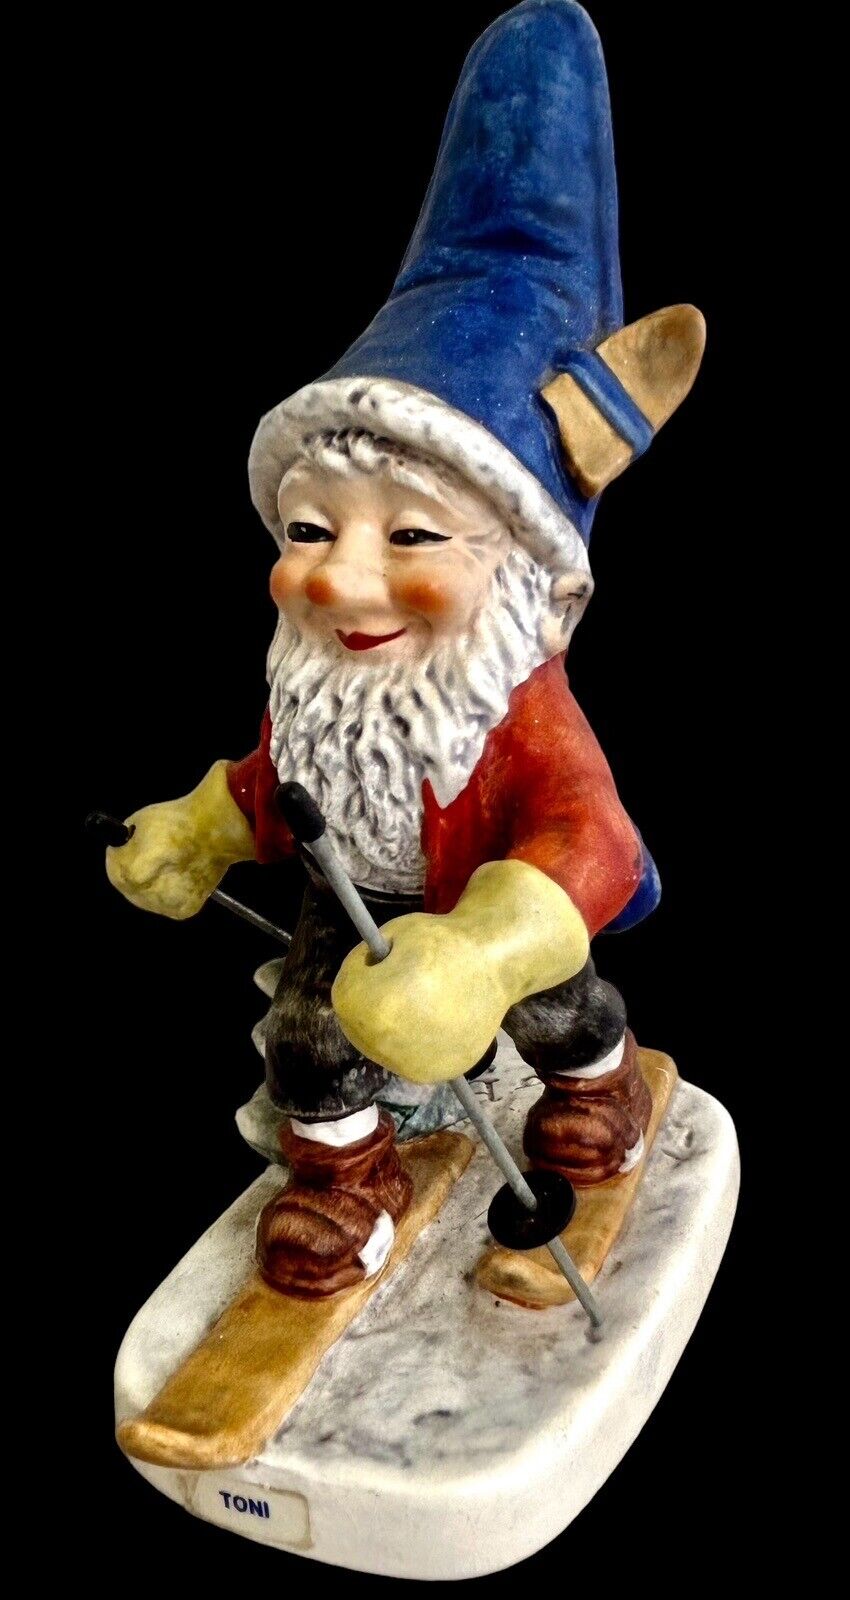 Goebel Gnome Figurine Hummel Co Boy Dwarf Germany 522 Toni Skier Figure W/poles